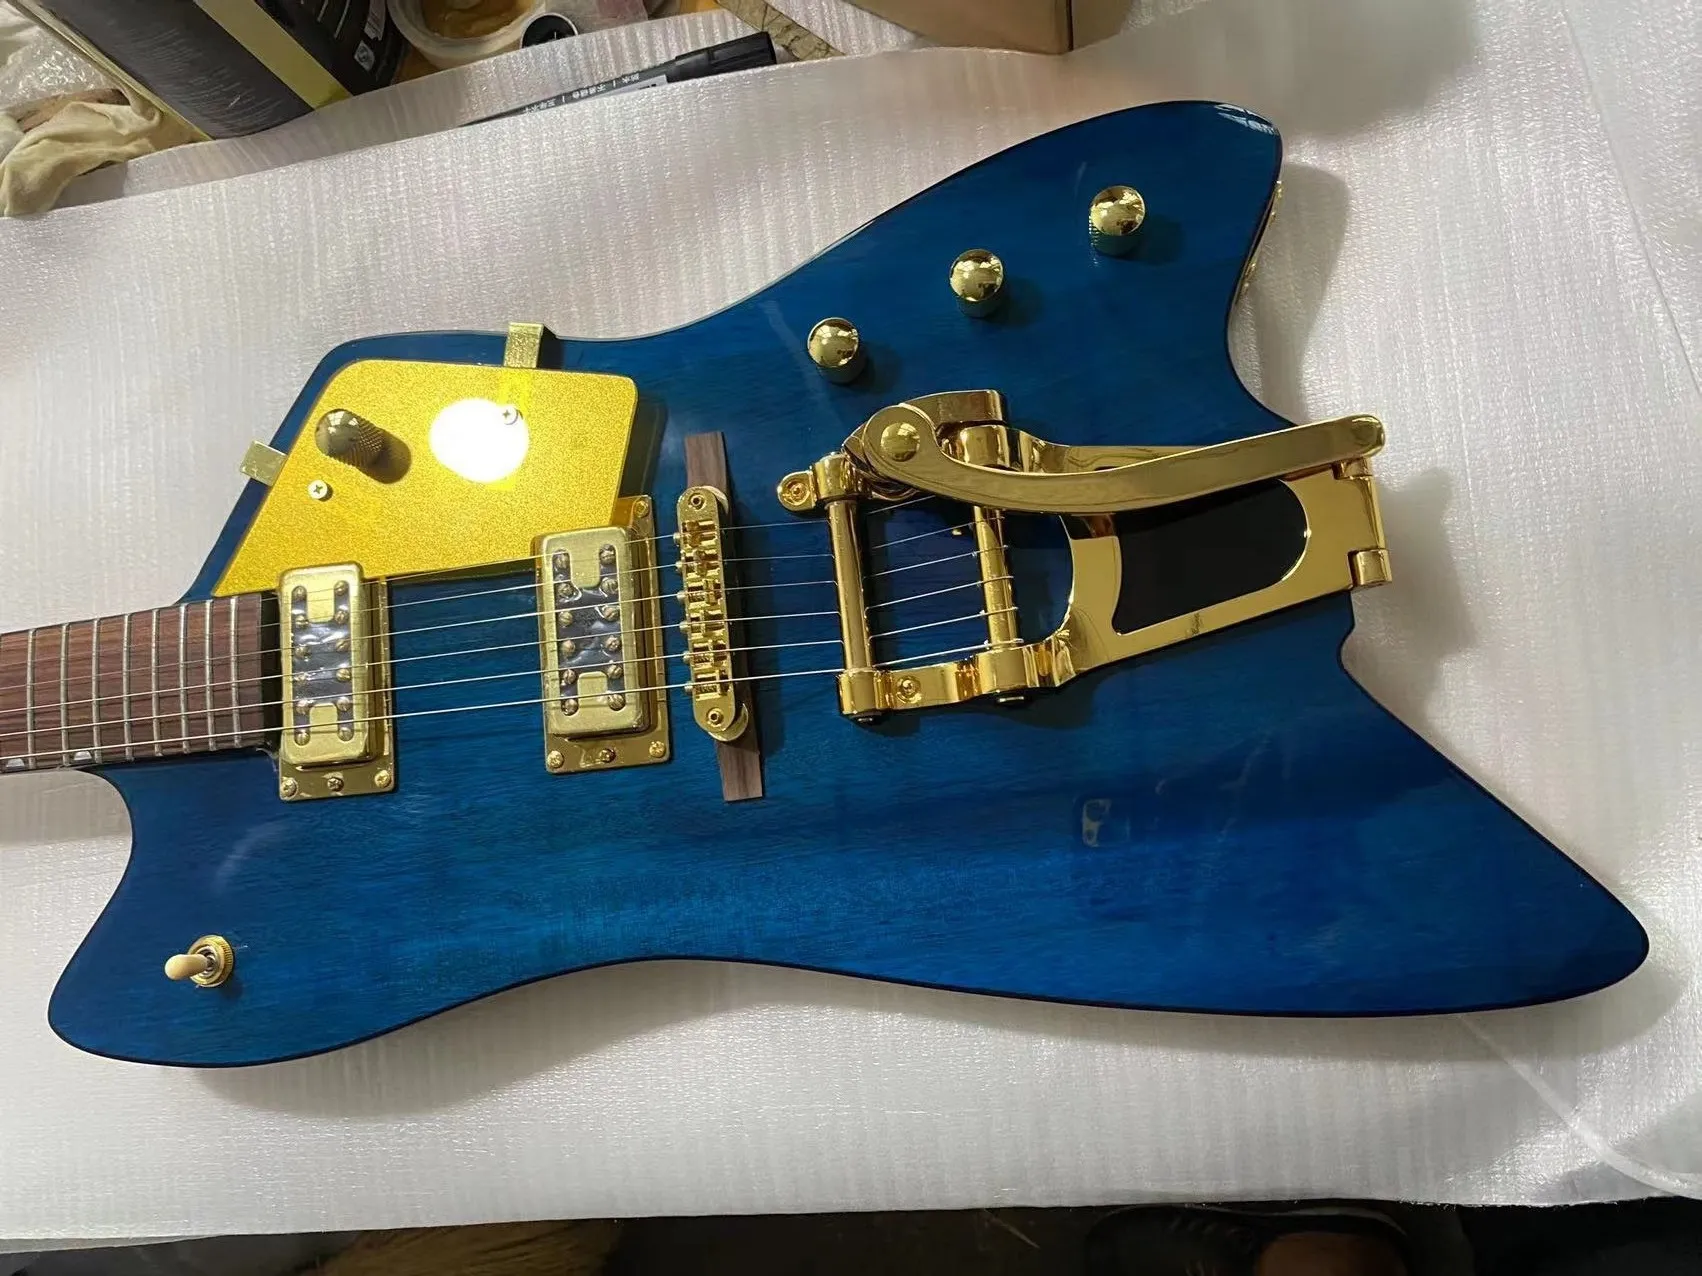 Niestandardowe 6199 Billy Bo Jupiter Blue Thunderbird Electric Gitara Black Body Binding Bigs Tremolo Bridge Gold Hardware Sparkle Gold Pickugard